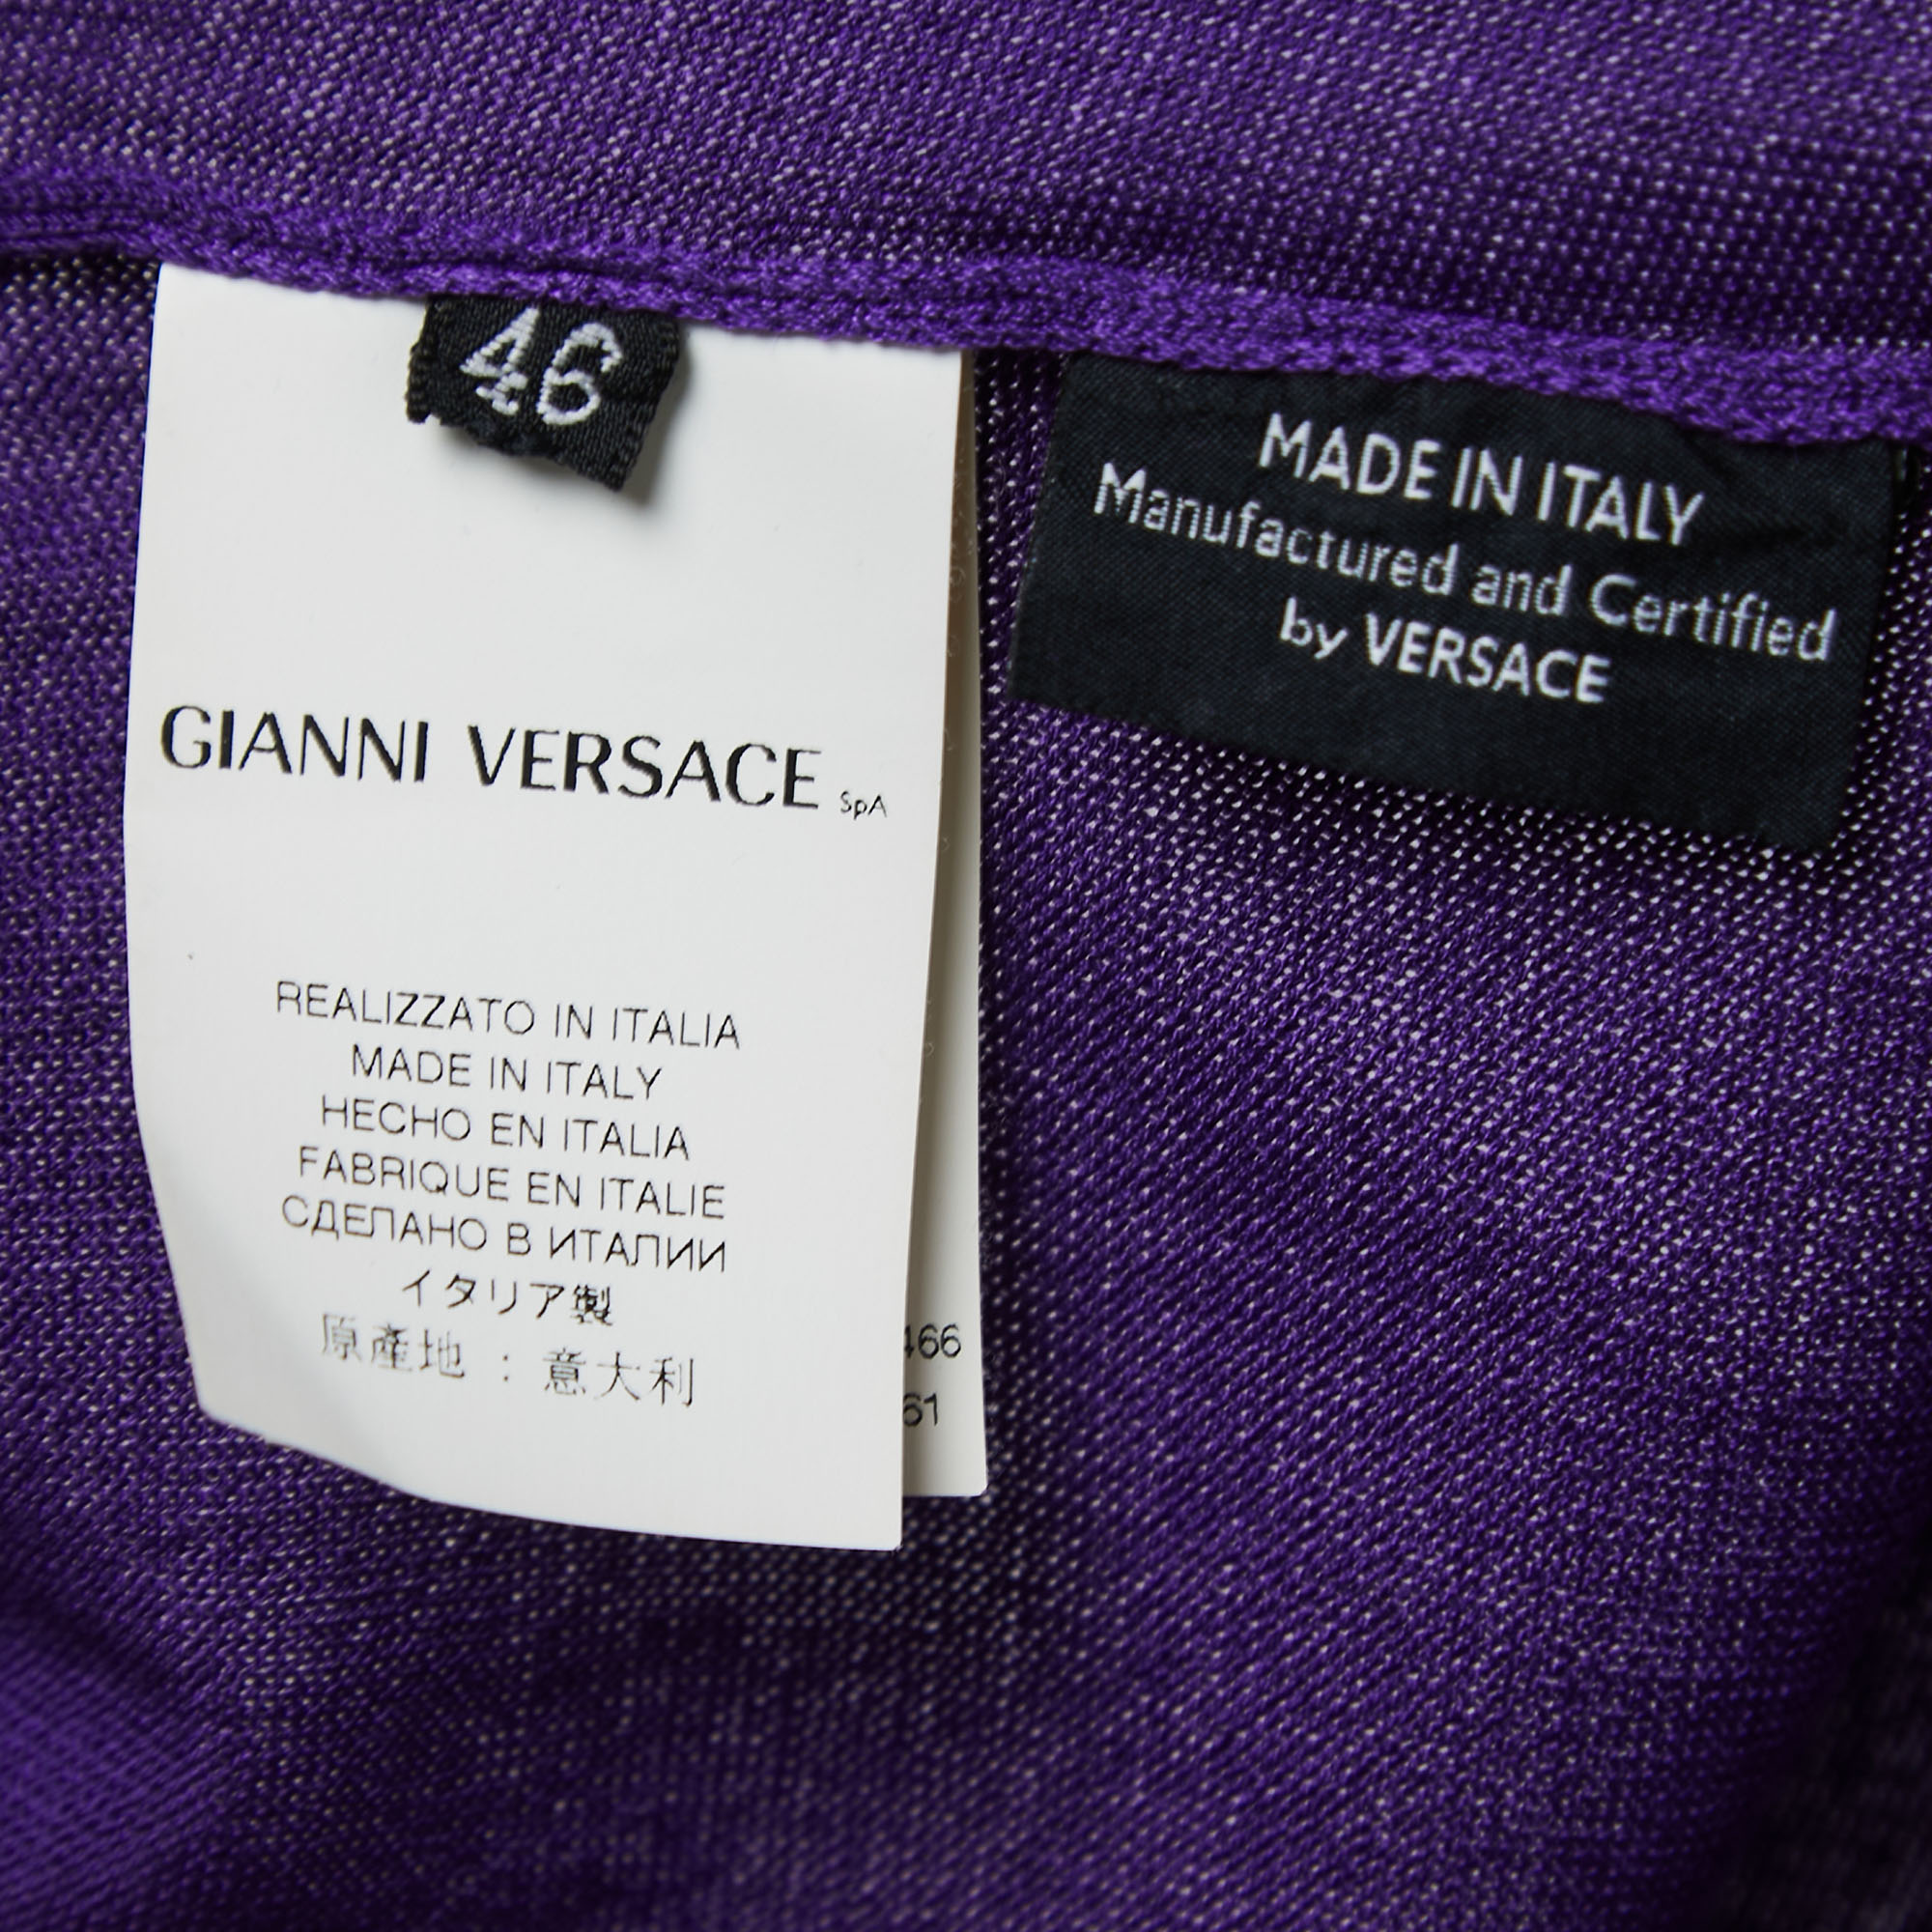 Versace Purple Silk Knit Contrast Trim Sleeveless Top L